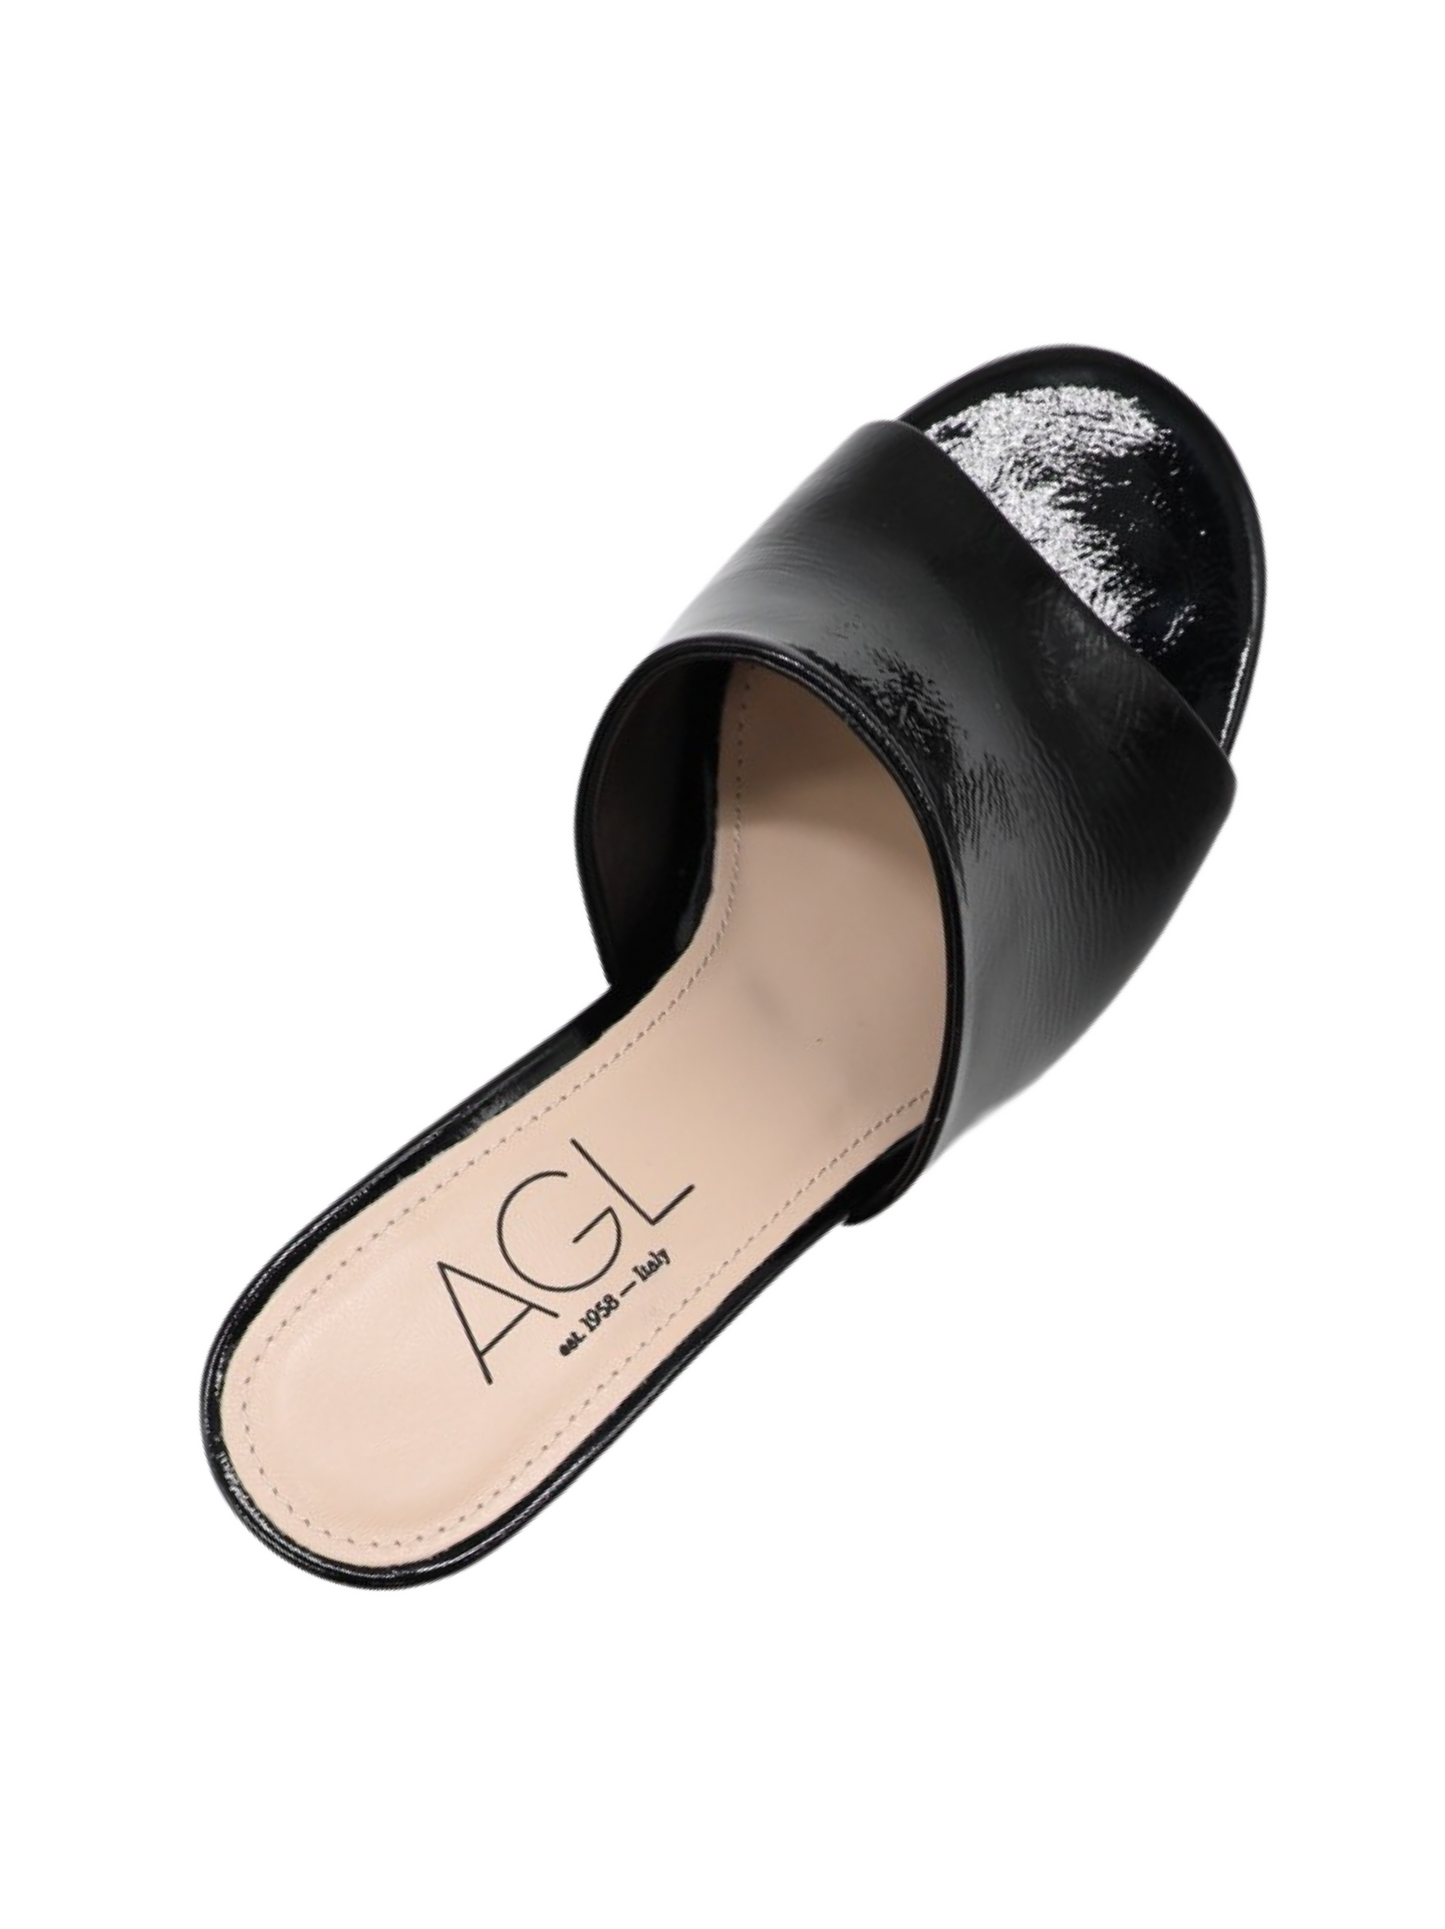 AGL Dorica M Slide Sandal Heel in Black